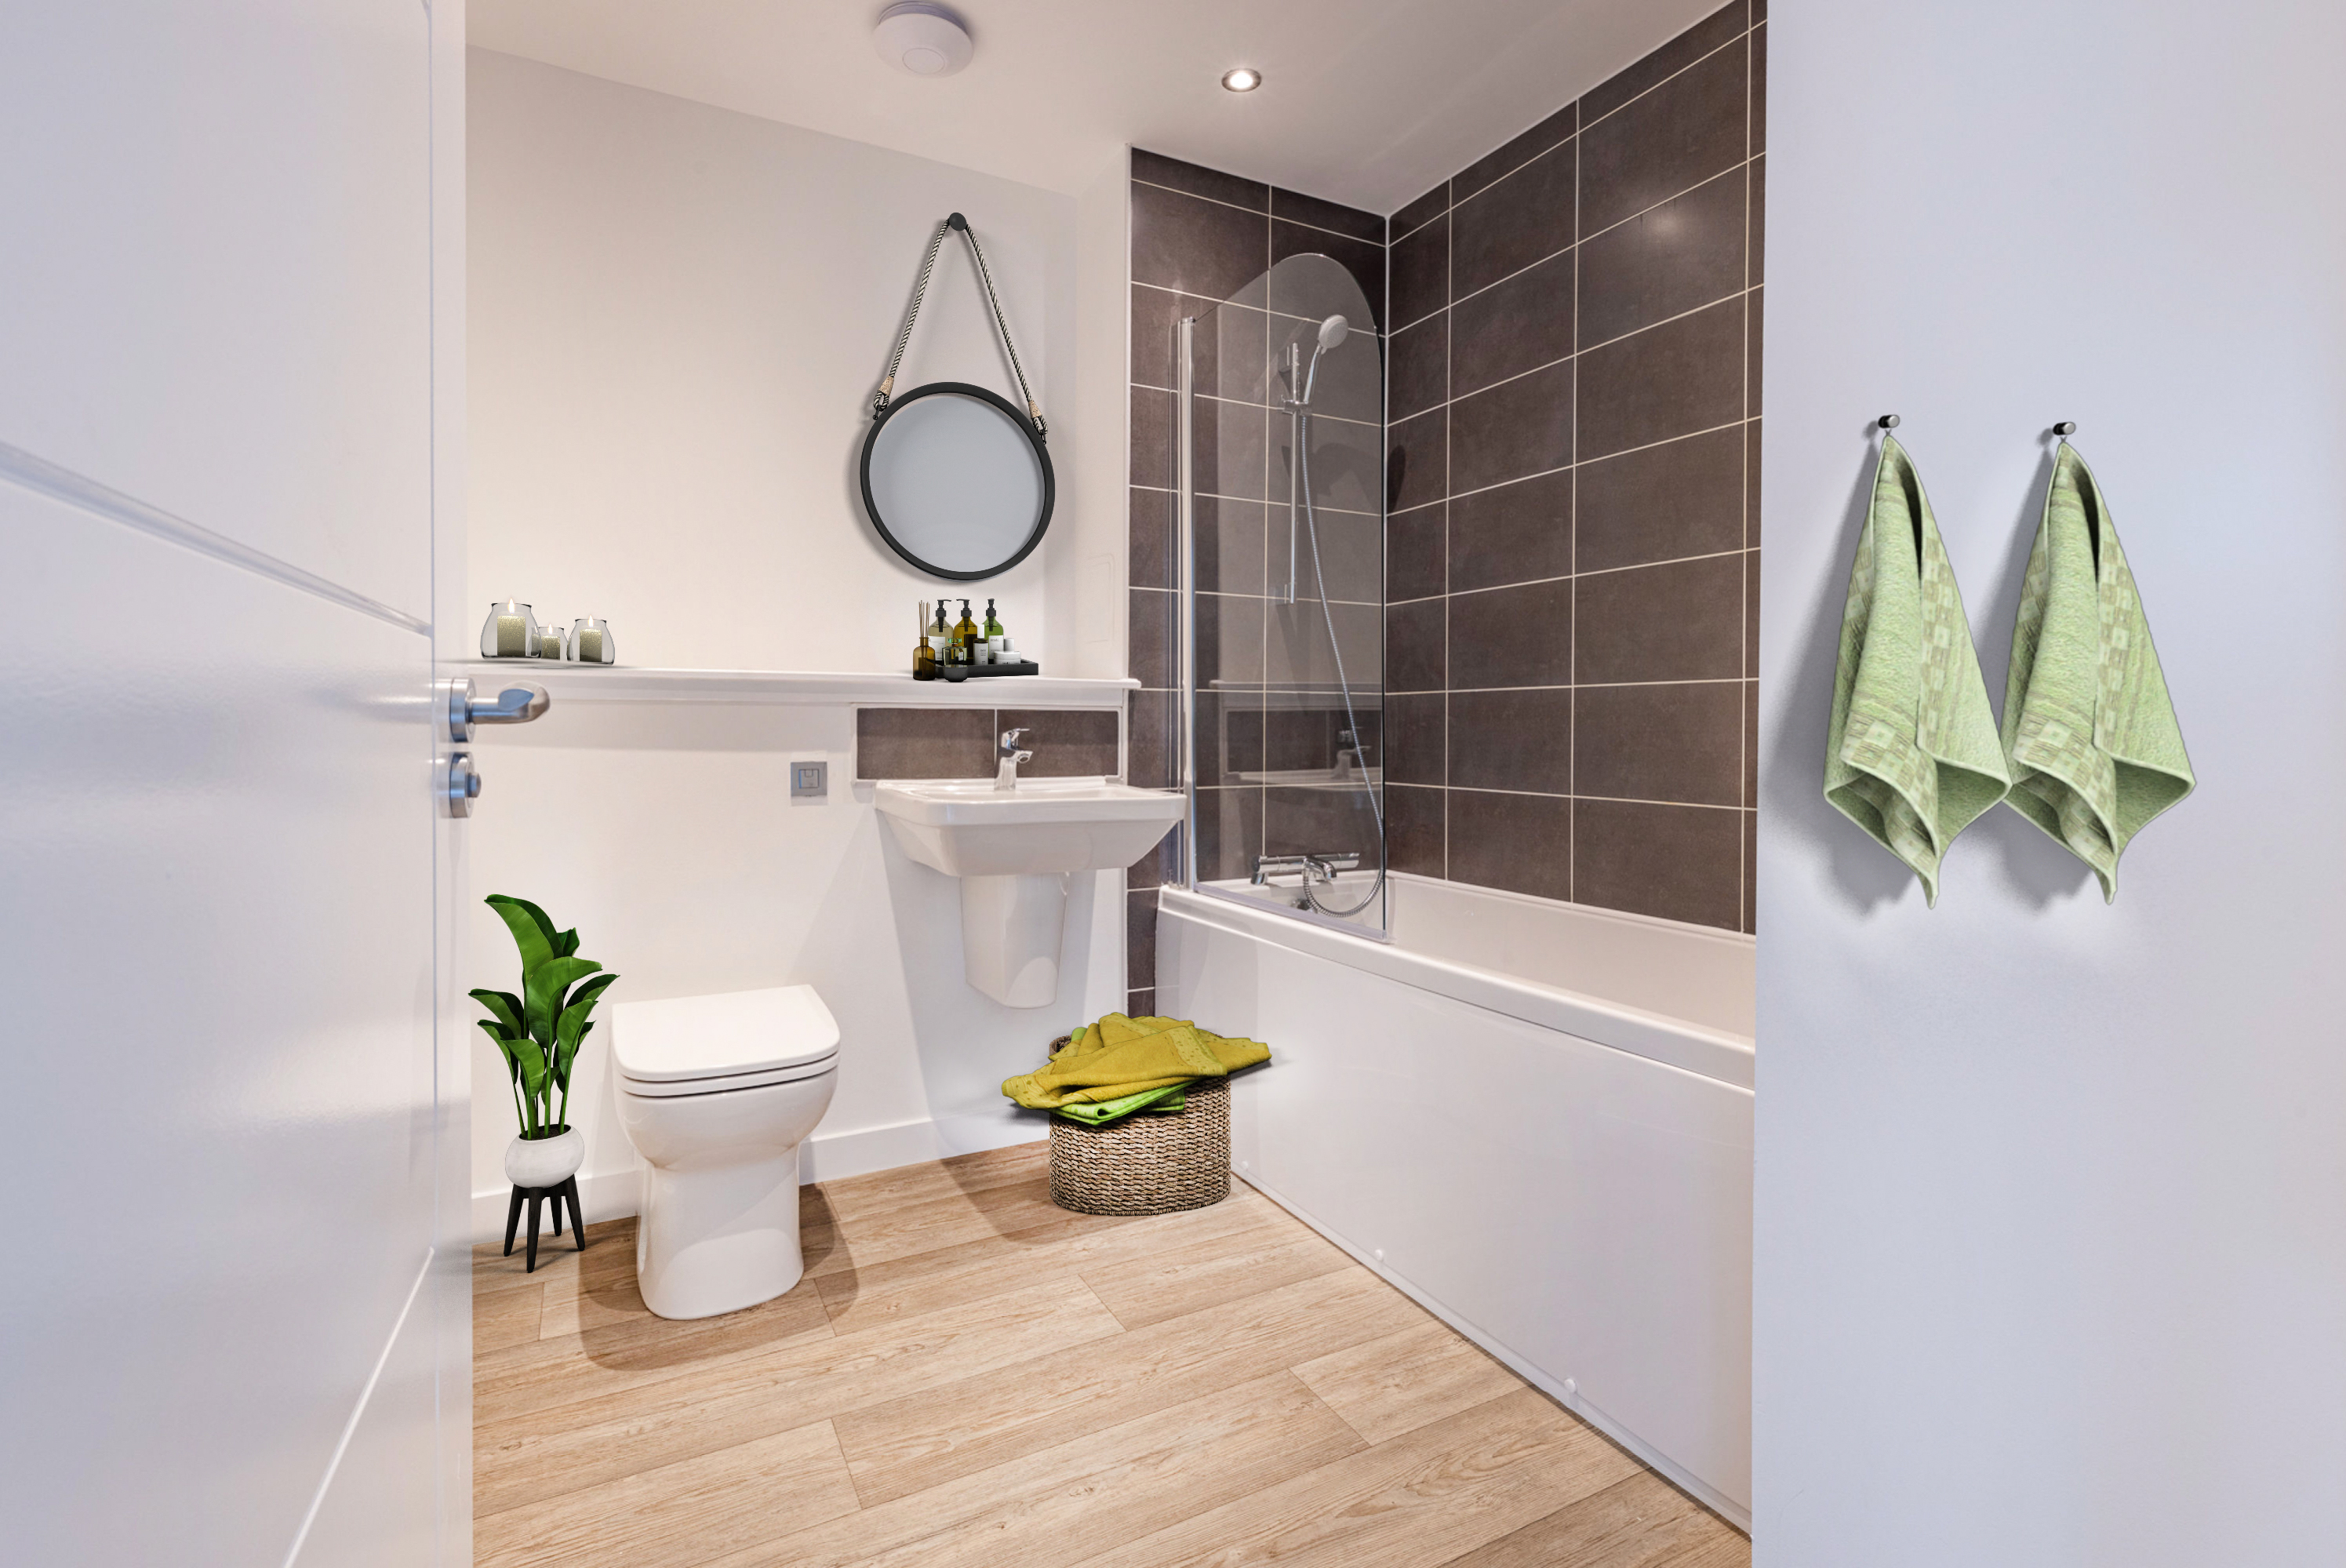 Styled bathroom in Edinburgh home development, featuring oak floors and green accessories 